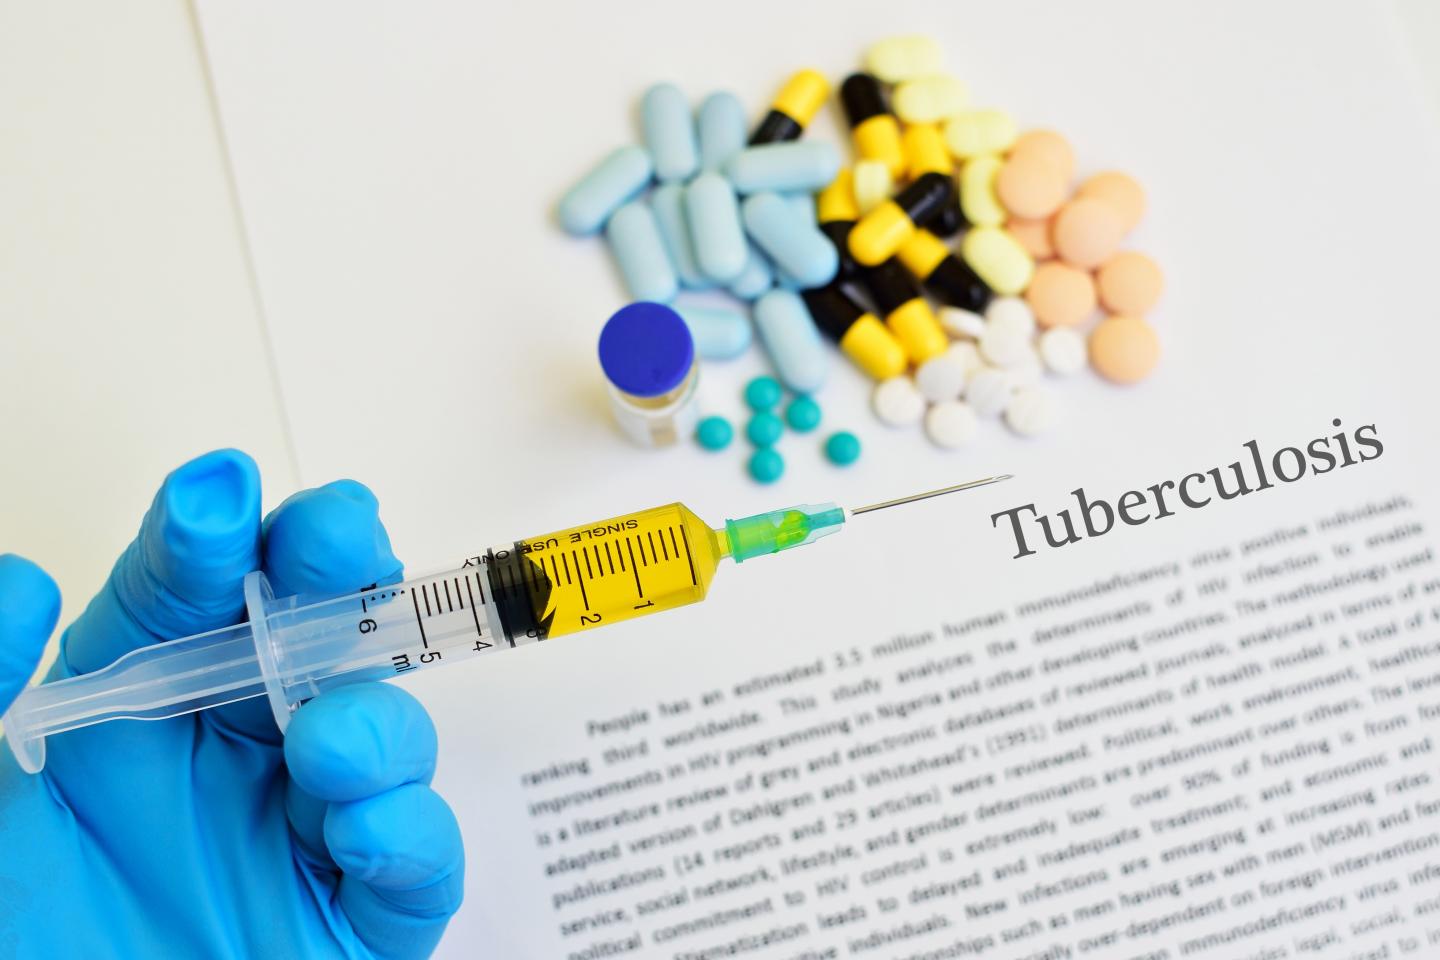 Tuberculosis Treatment